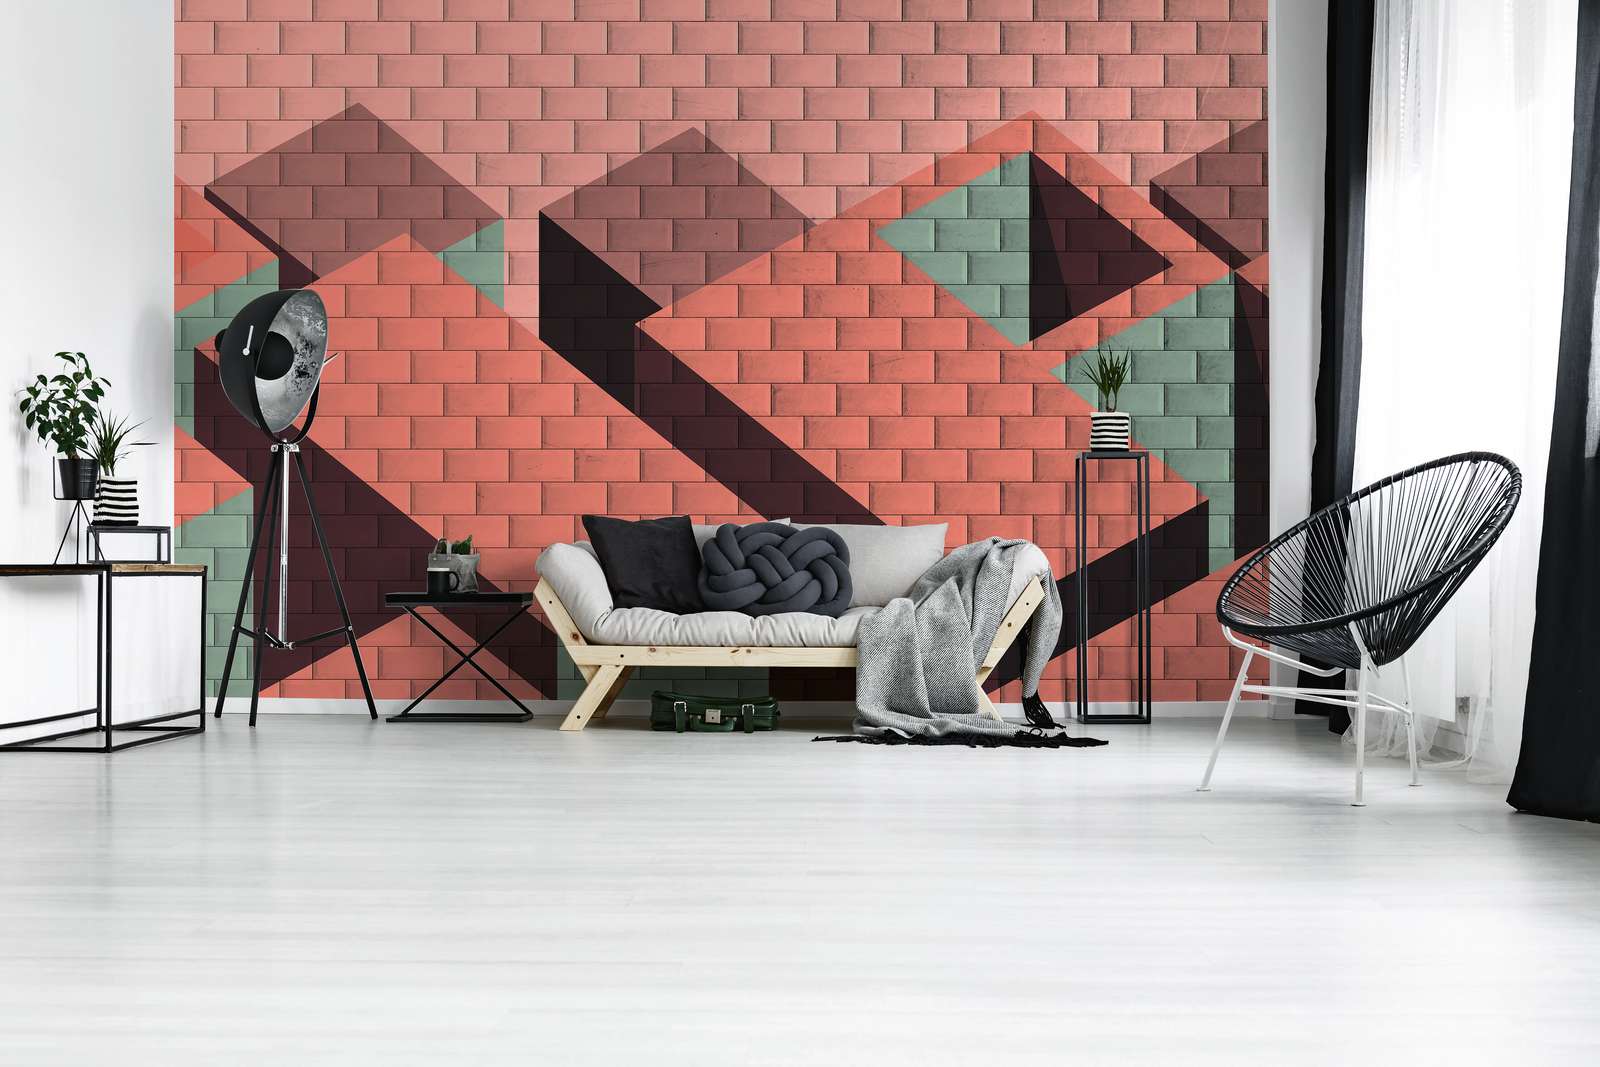             Fototapete Ziegelsteinmauer mit Block-Bemalung – Rot, Pink, Grün
        